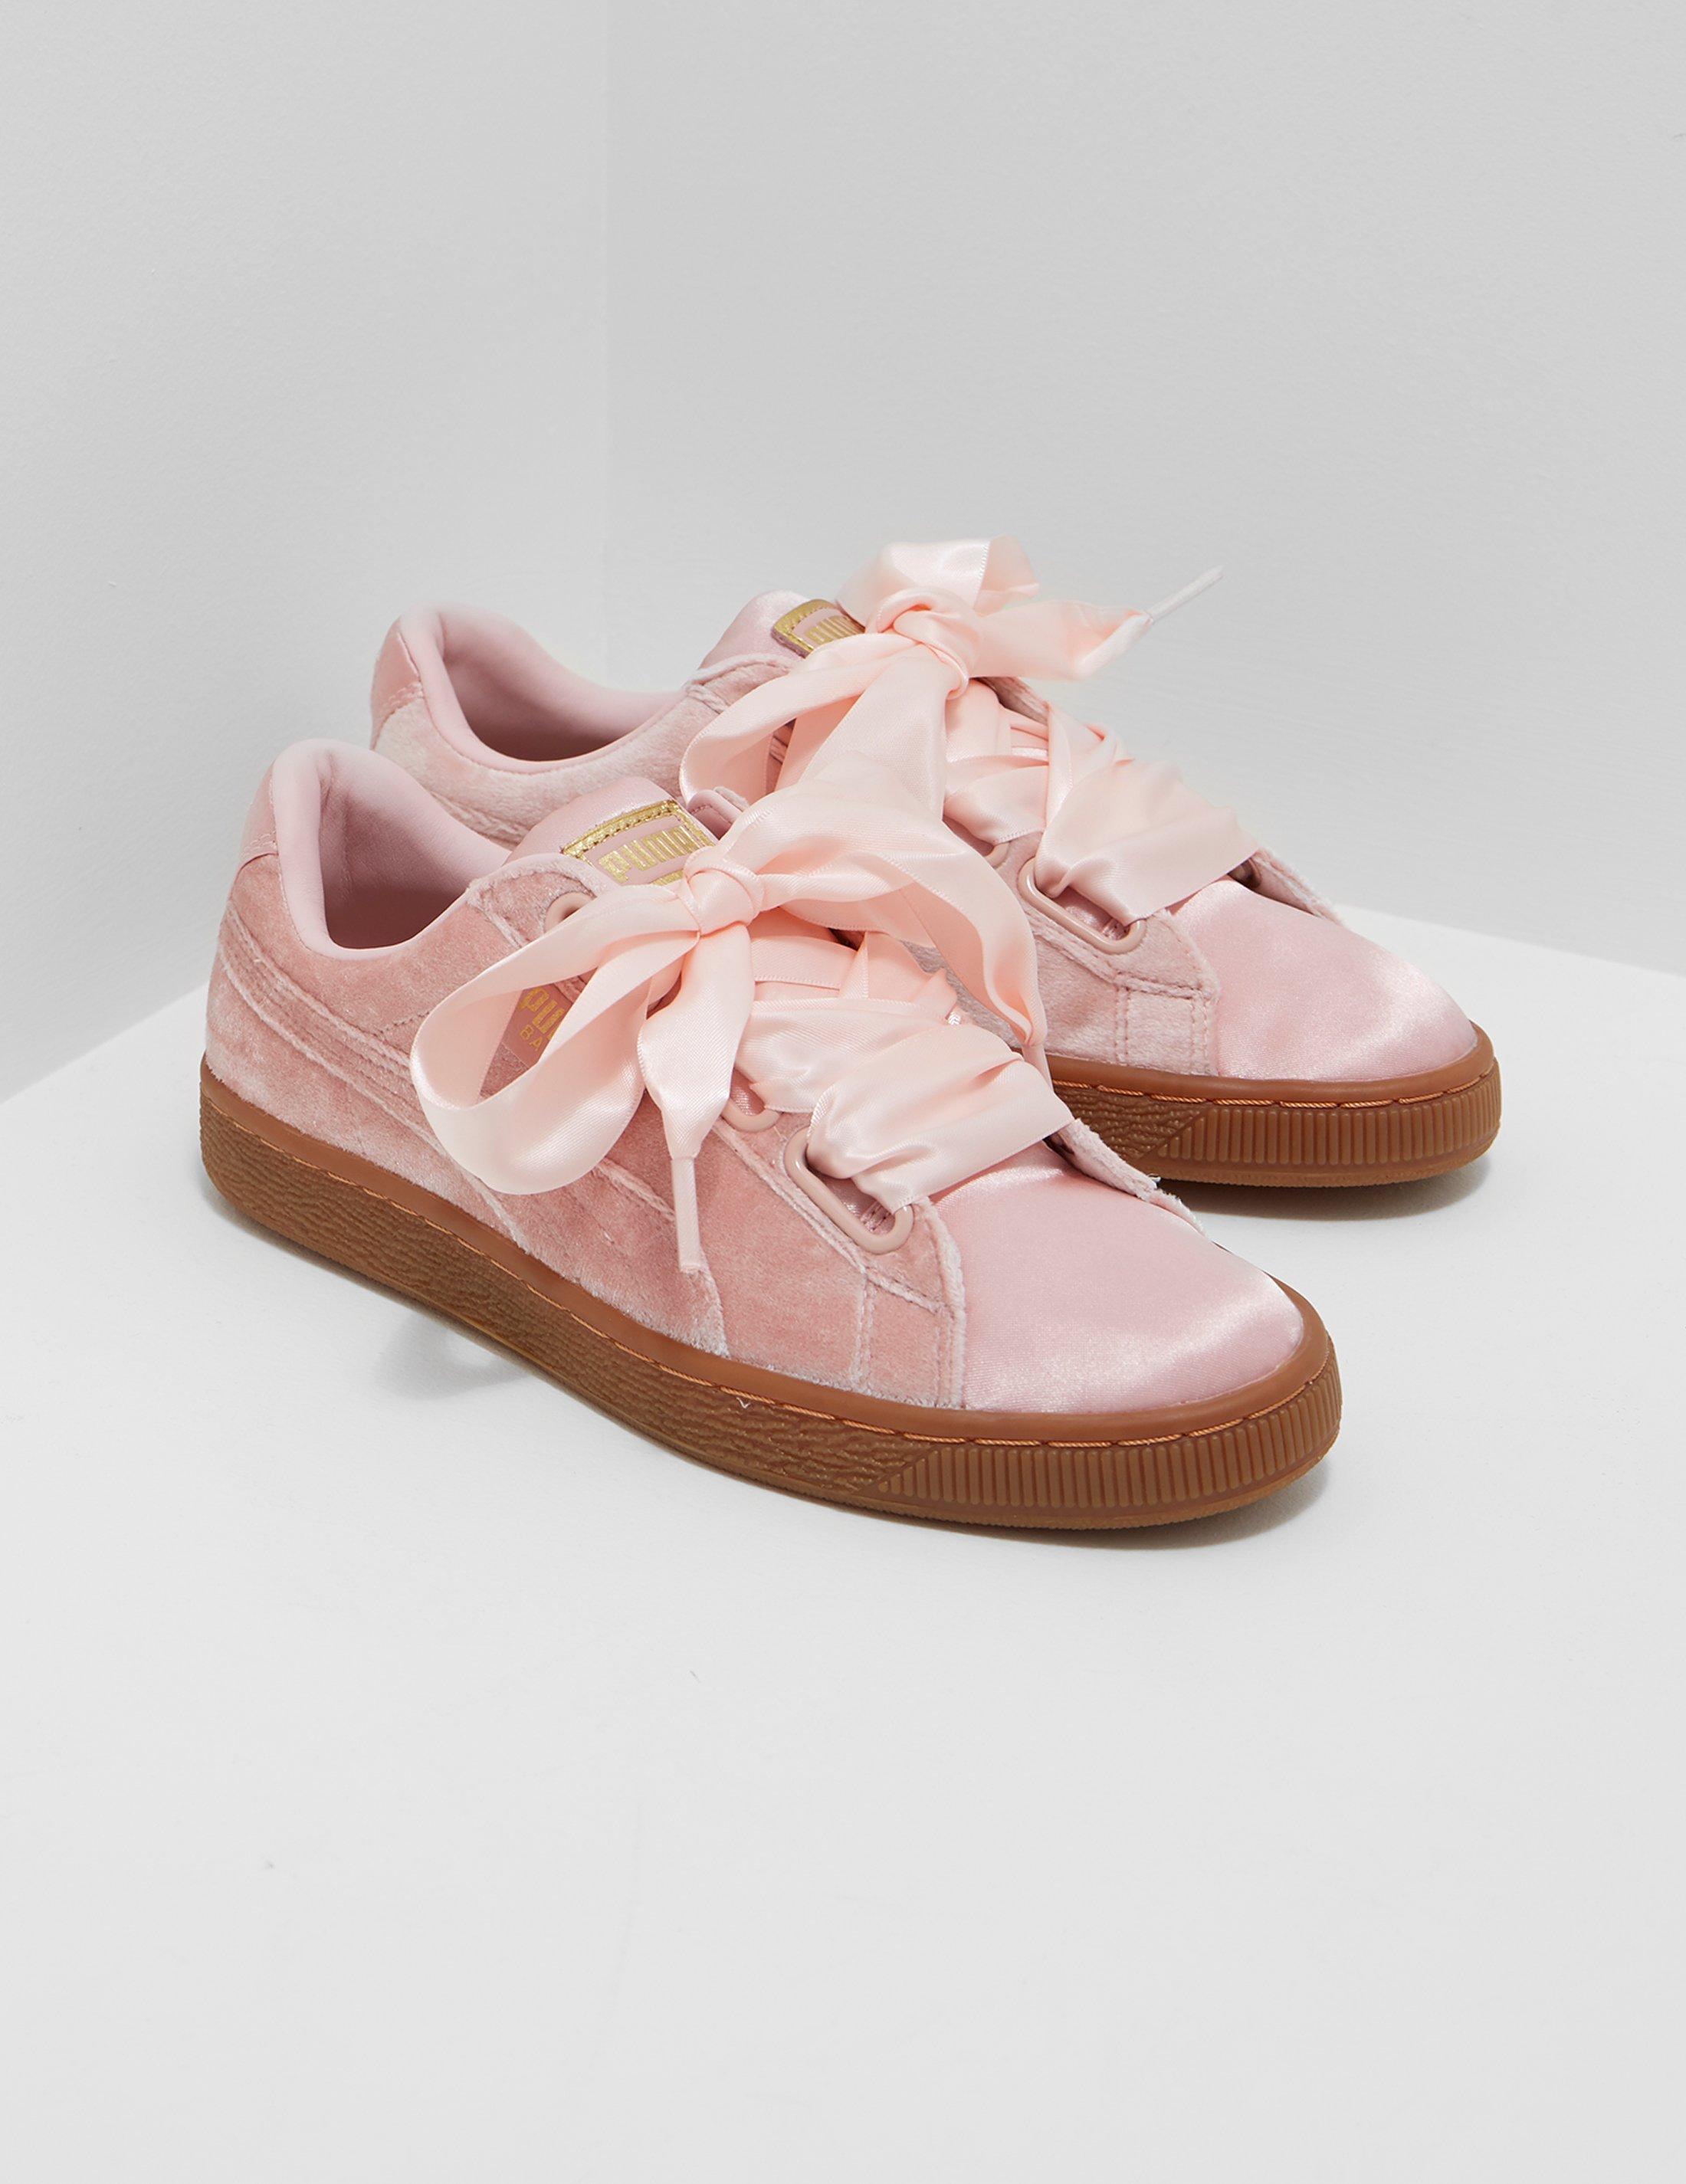 puma pink velvet shoes Off 67% - www 